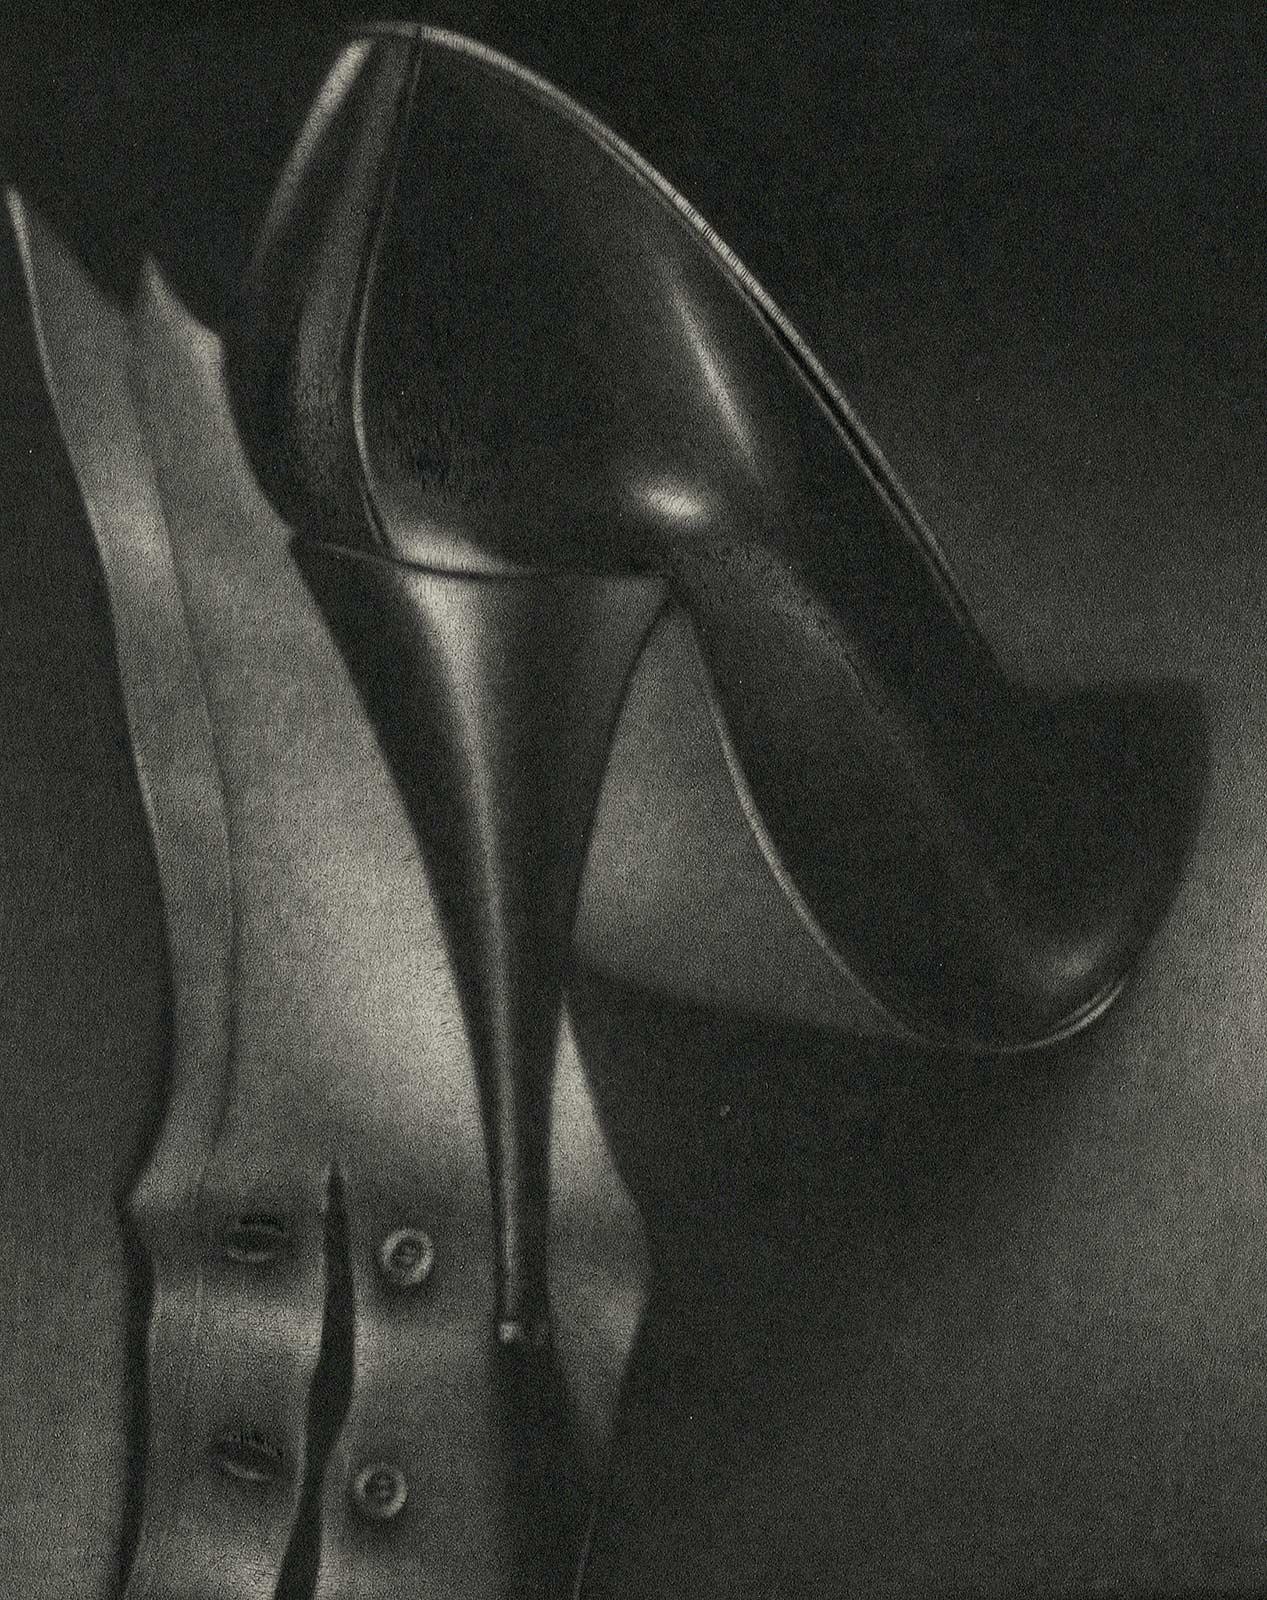 Le Talon Aigviille  (Marlene Dietrich's Stiletto Heel -- In time for PRIDE) - Print by Laurent Schkolnyk